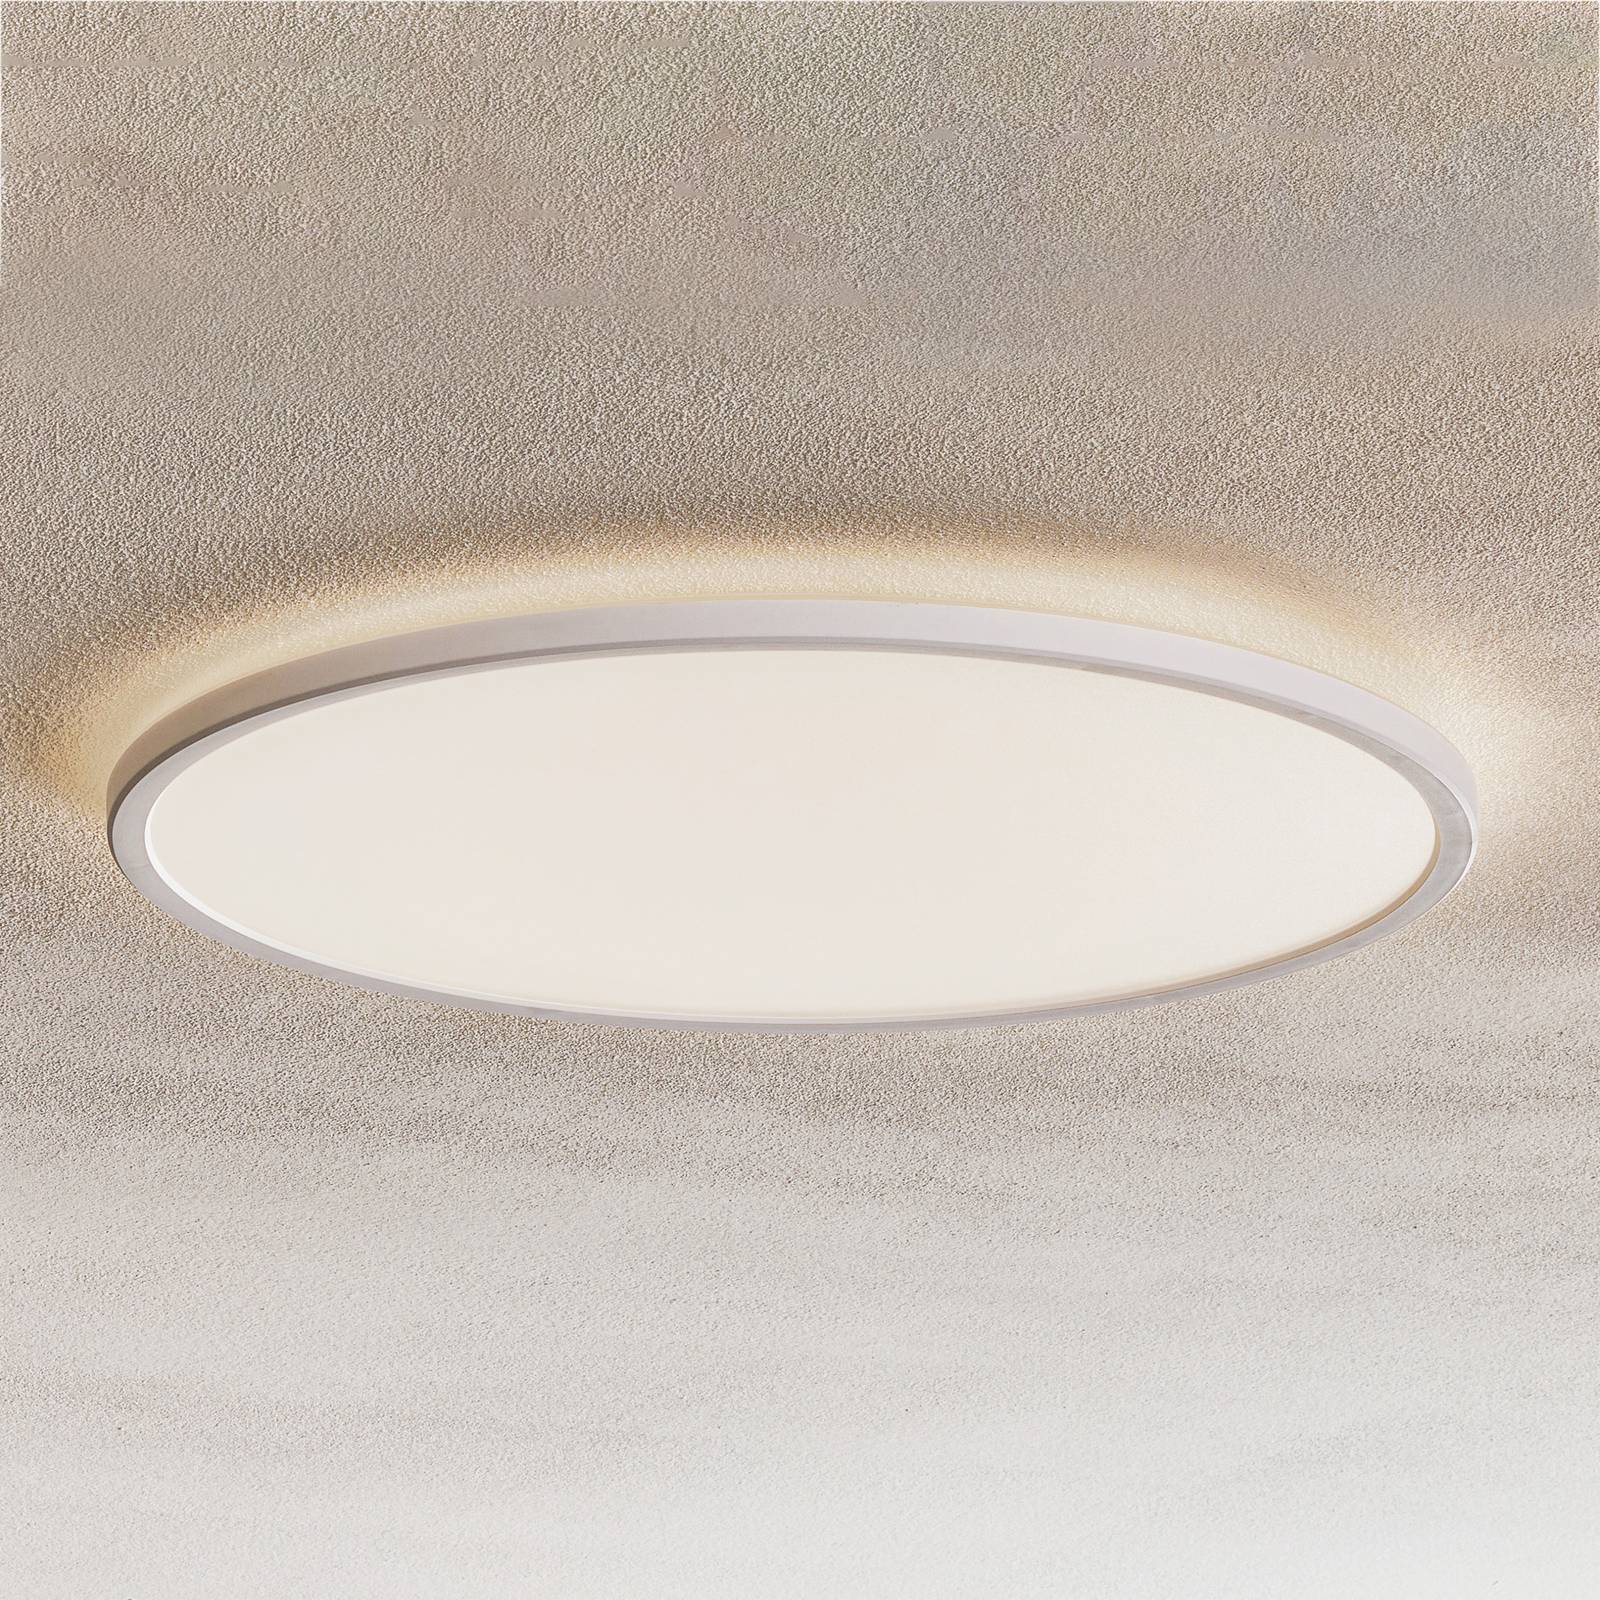 Planura LED ceiling light, dimmable, Ø 42 cm